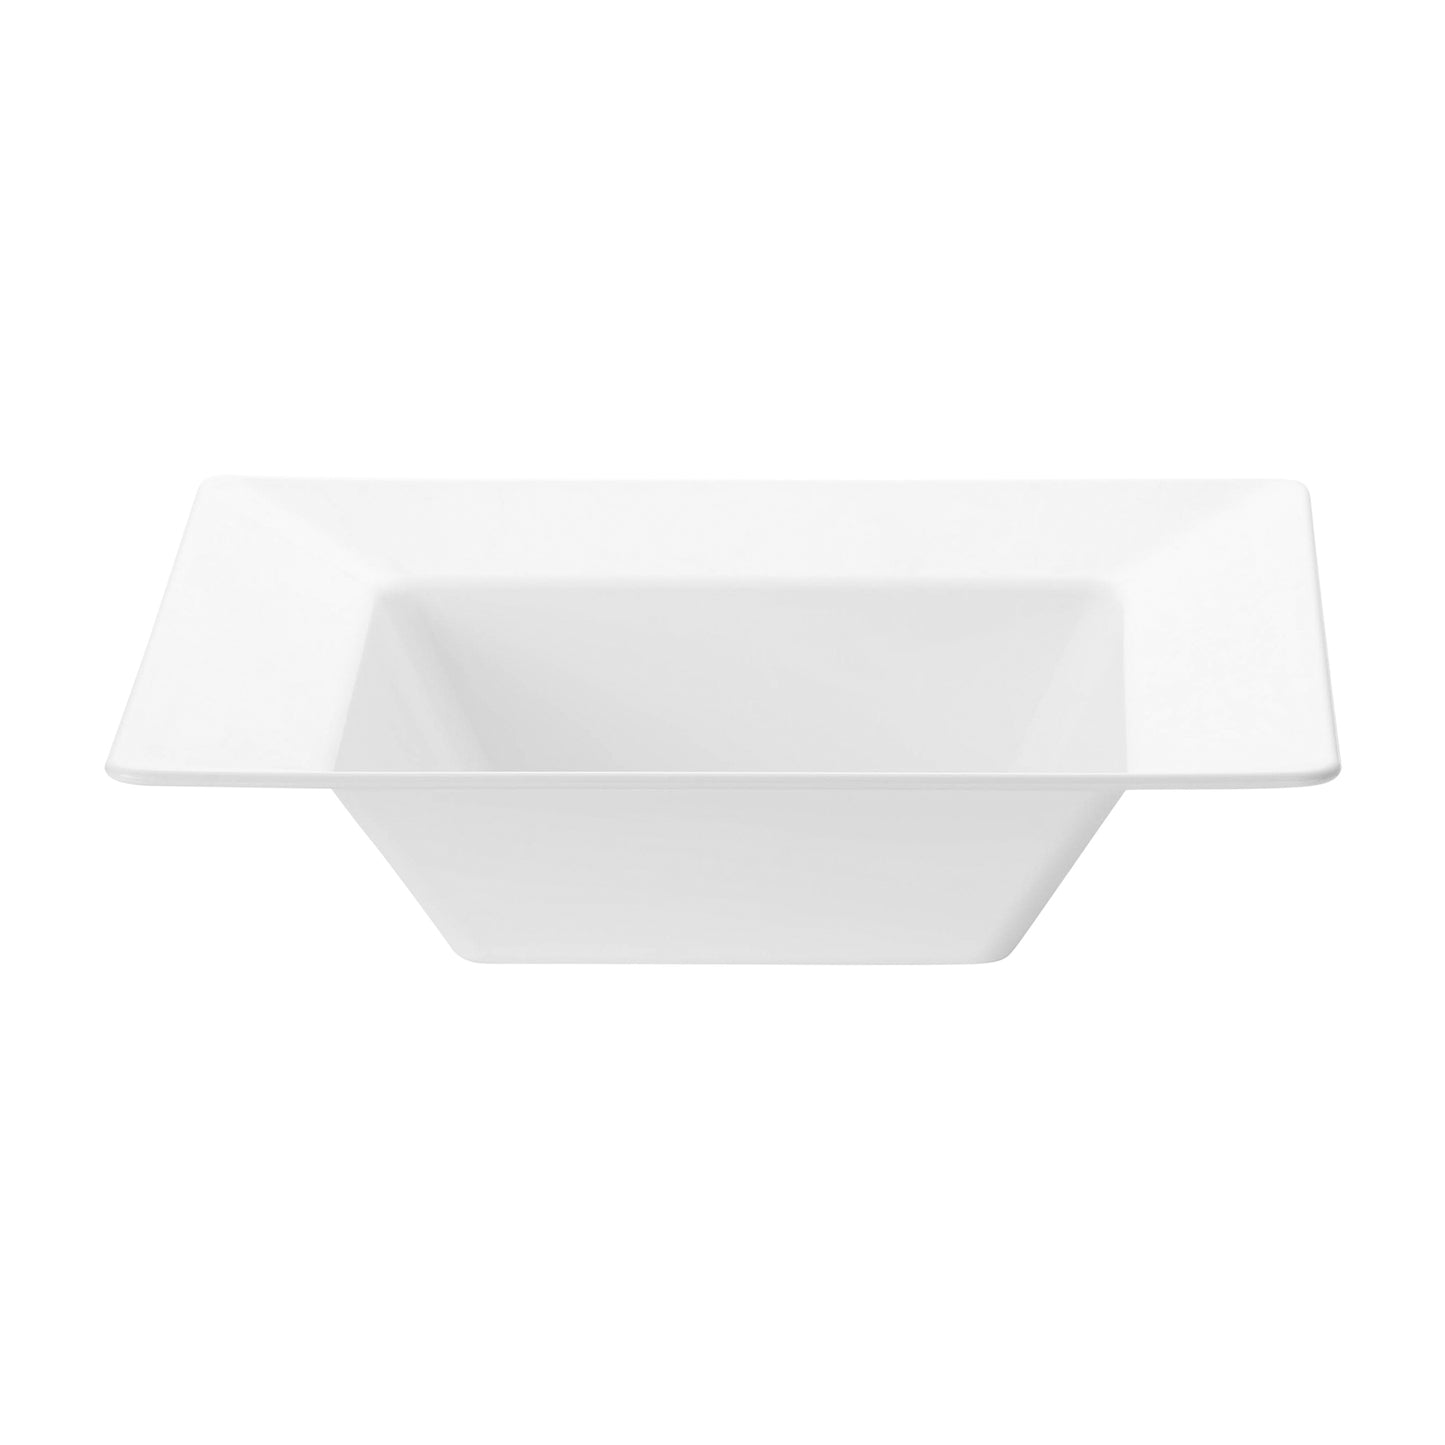 White Square Disposable Plastic Dessert Bowls (5 oz.)